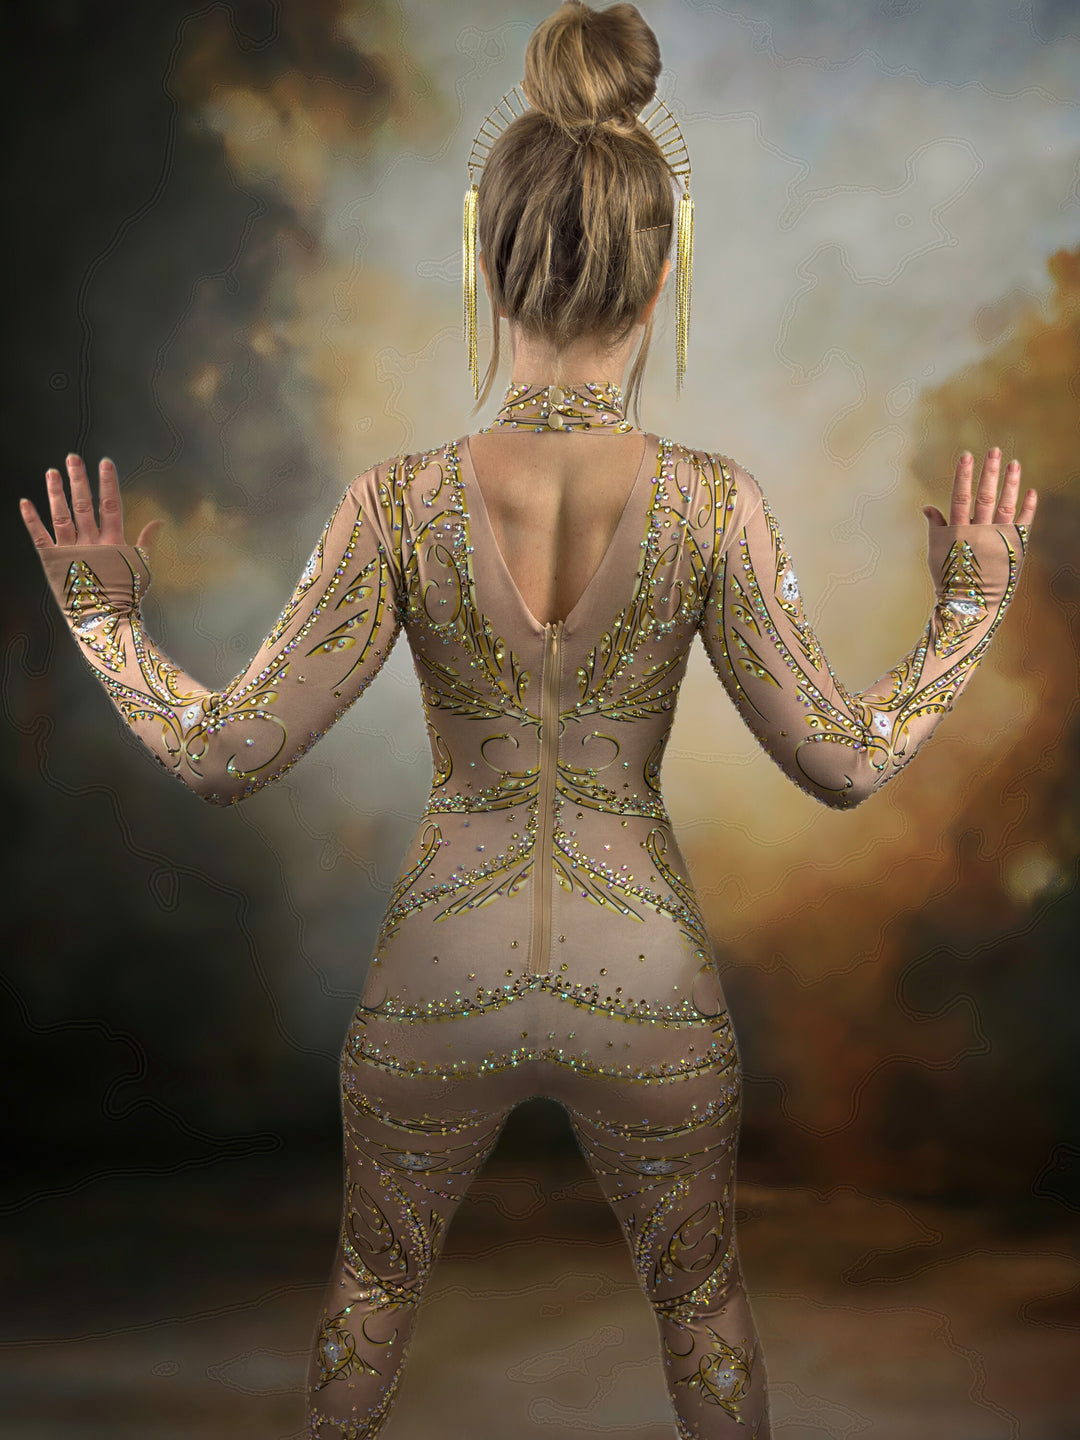 Surya Rhinestone Bodysuit / Gold Party Dress Diamond Crystal Catsuit / Festival Outfit / Desert NYE Tribal Burning Man Performer Disco Dance